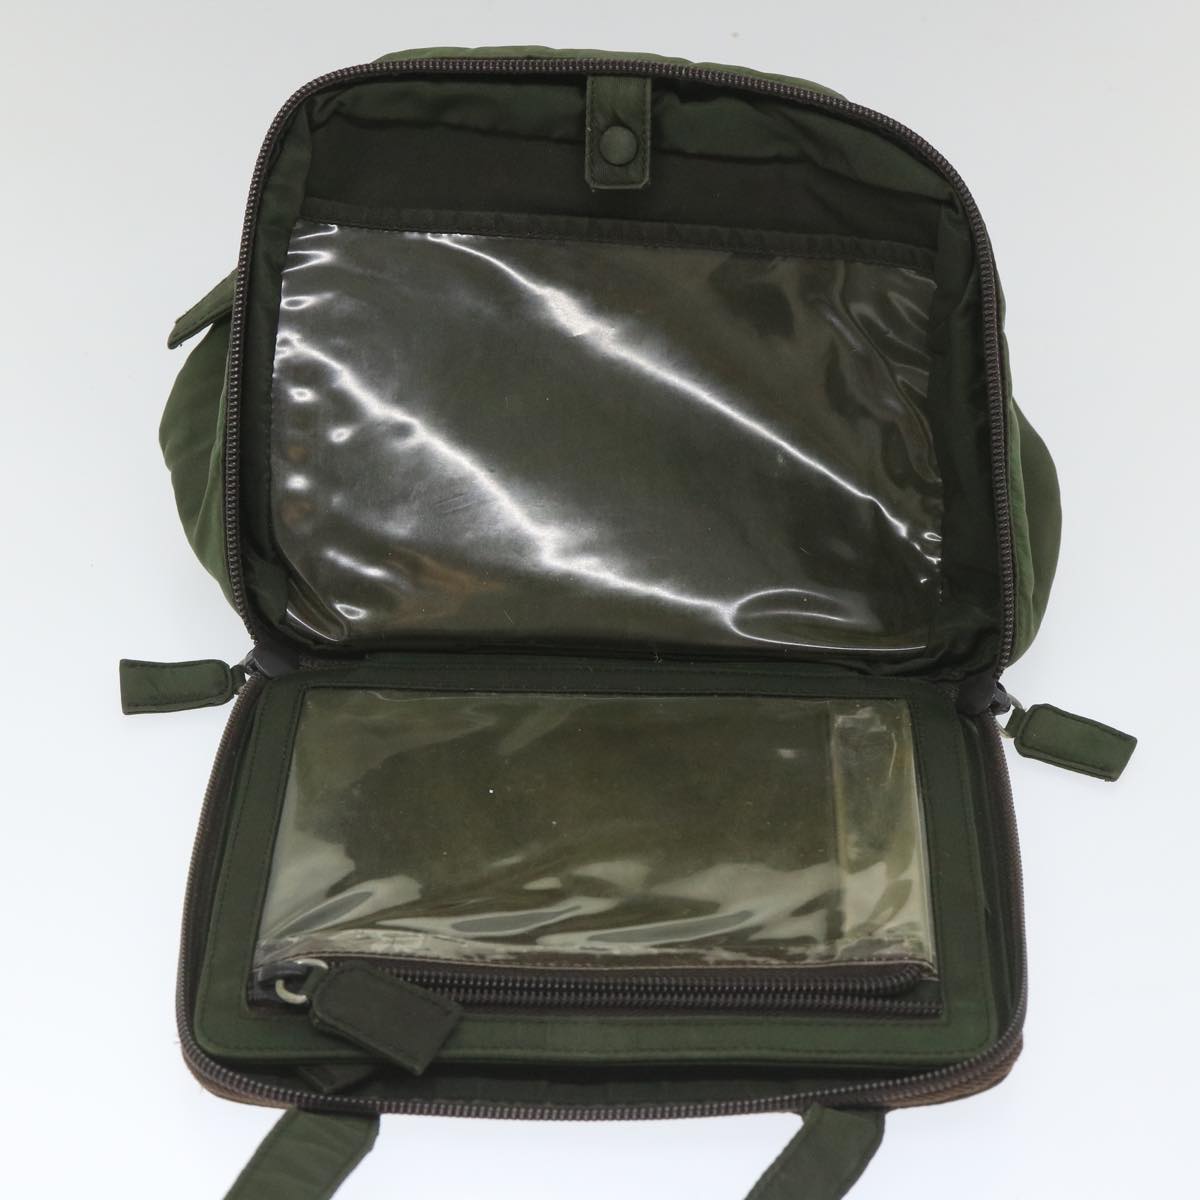 PRADA Hand Bag Nylon Khaki Auth fm2850